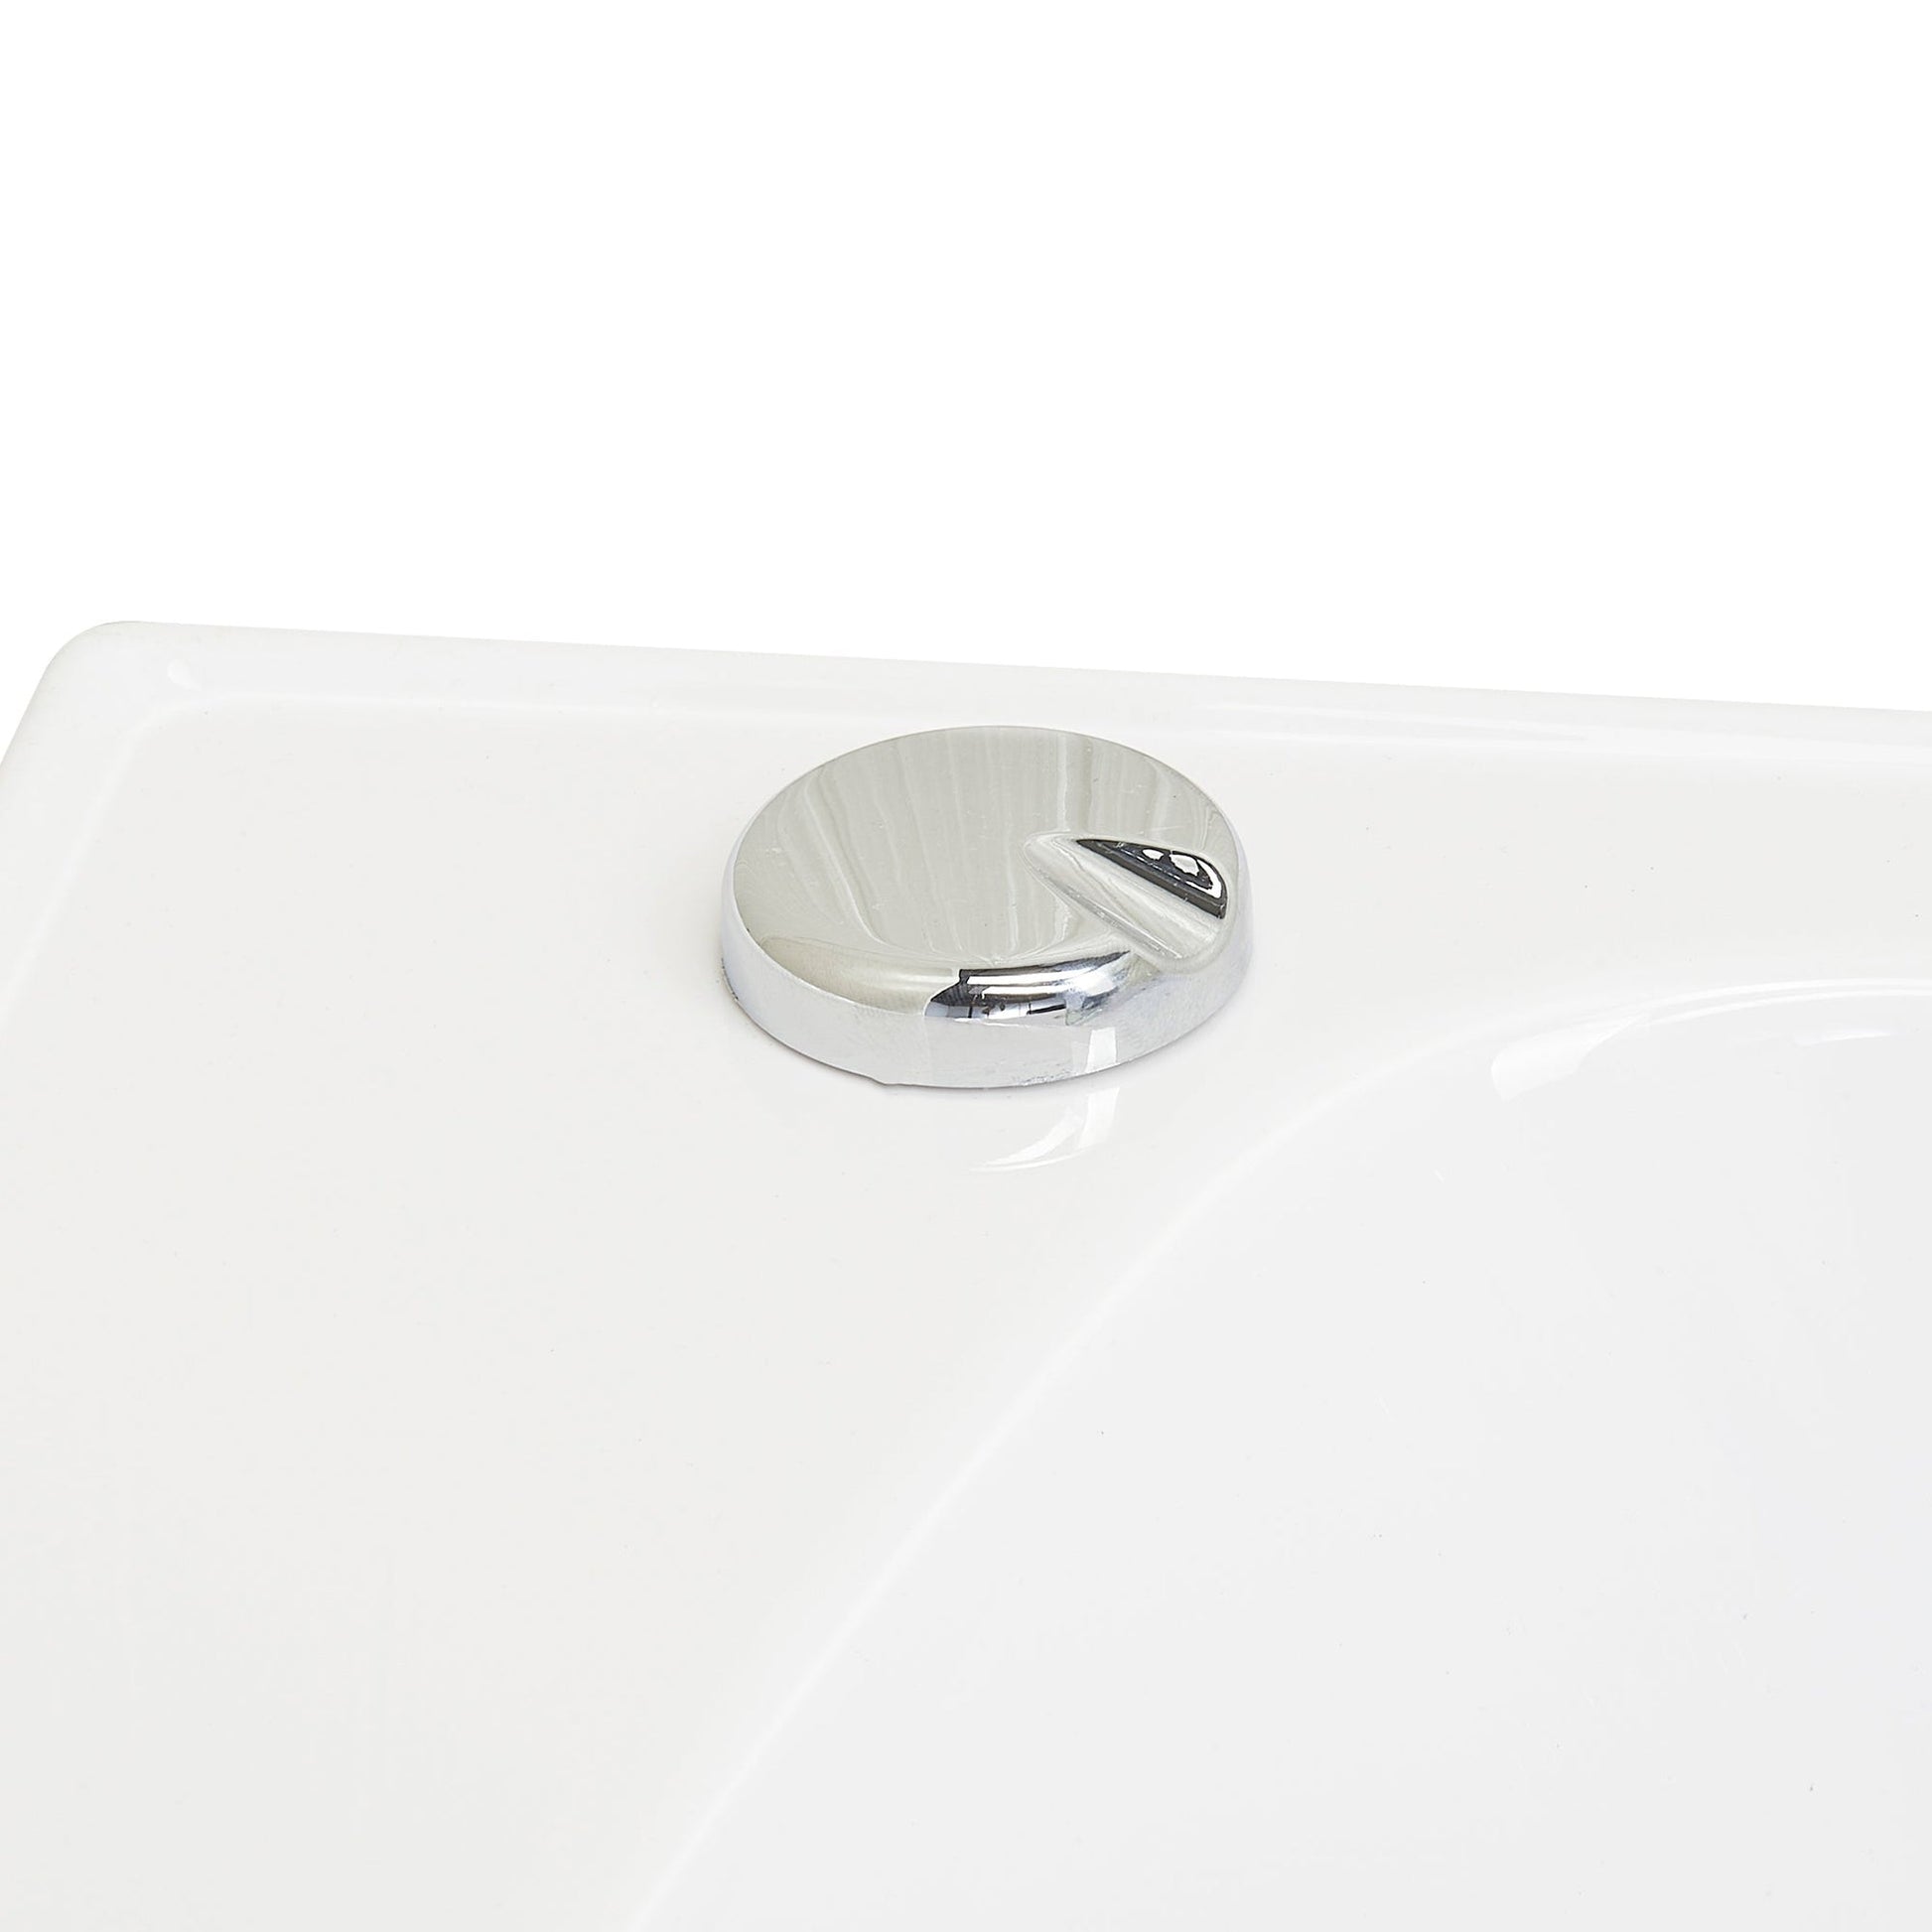 Ella's Bubbles Laydown 30" x 60" White Acrylic Hydro Massage Jet Walk-In Bathtub With Right Inward Swing Door